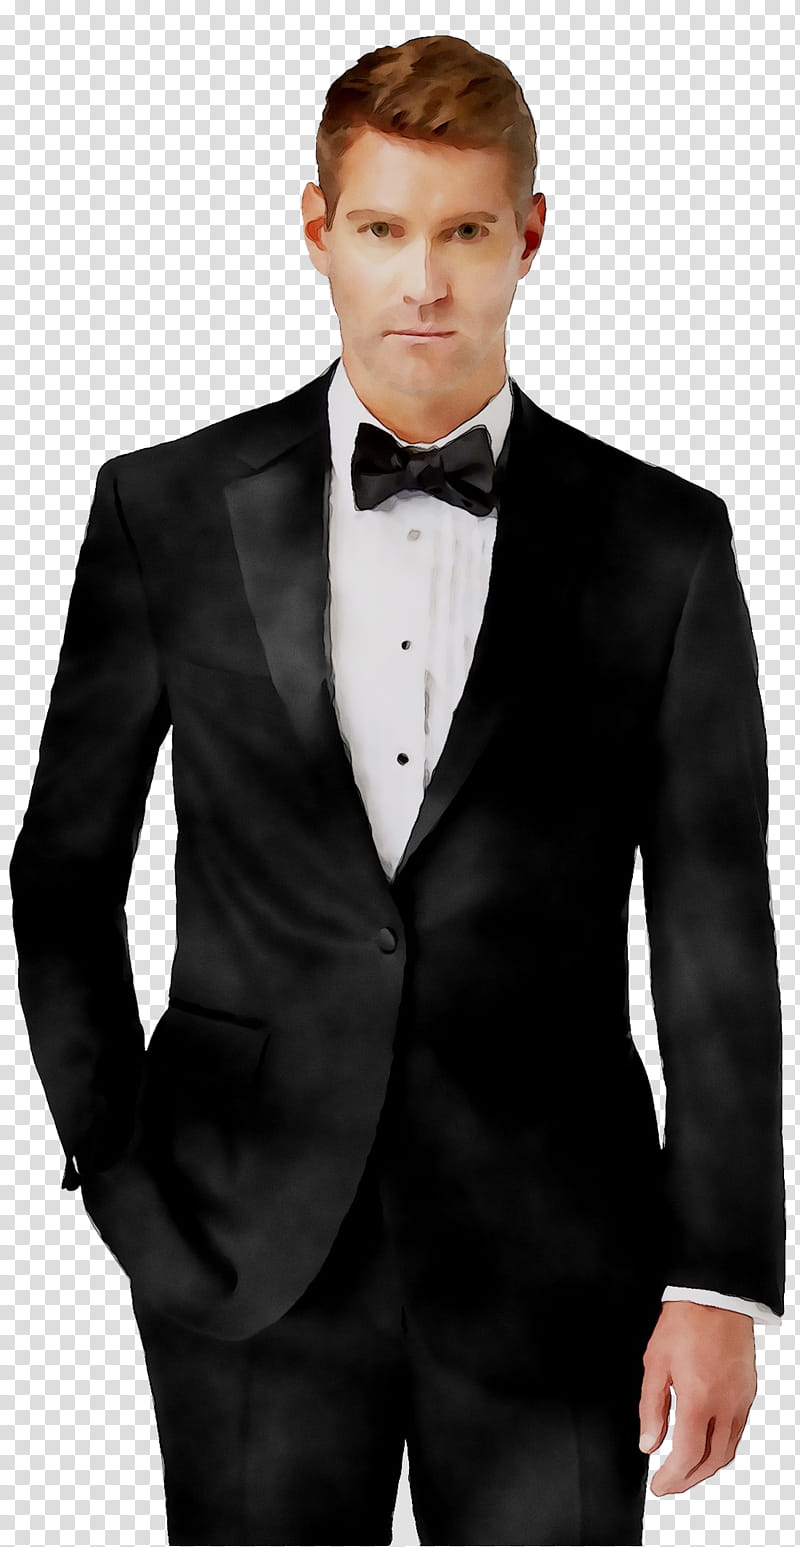 Bow Tie, Tuxedo, Suit, Blazer, Formal Wear, Clothing, Sport Coat, Man transparent background PNG clipart